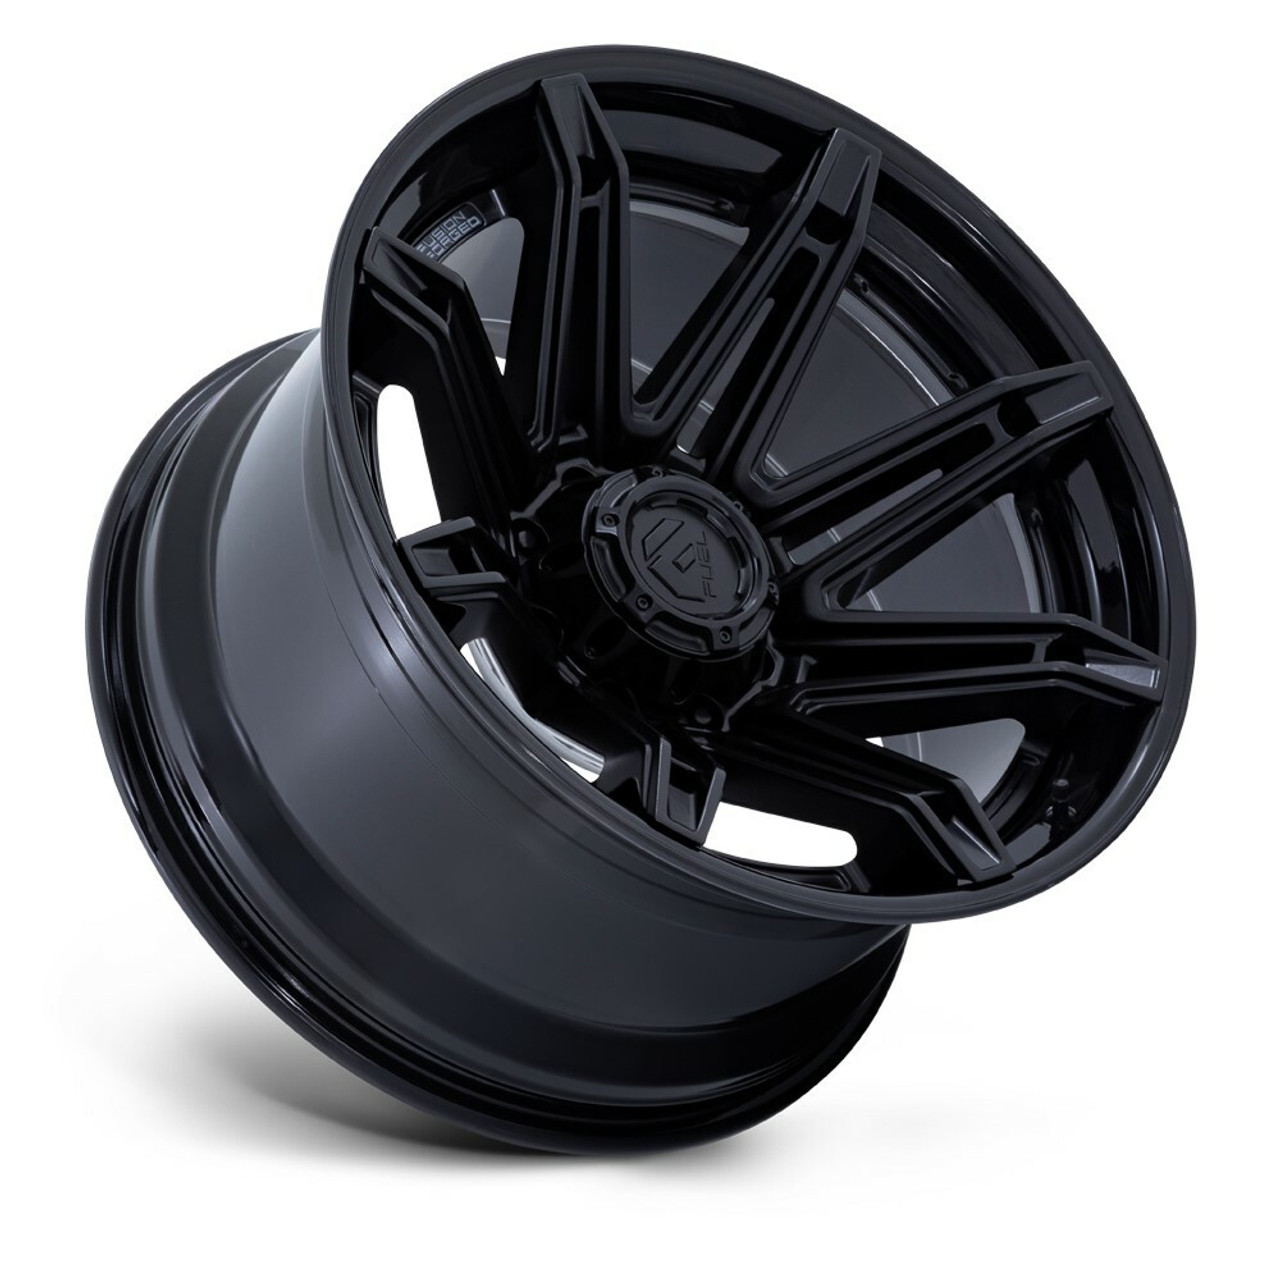 Fuel FC401 Brawl 24x12 8x6.5 Matte Black Gloss Black Lip 24" -44mm Lifted Wheel